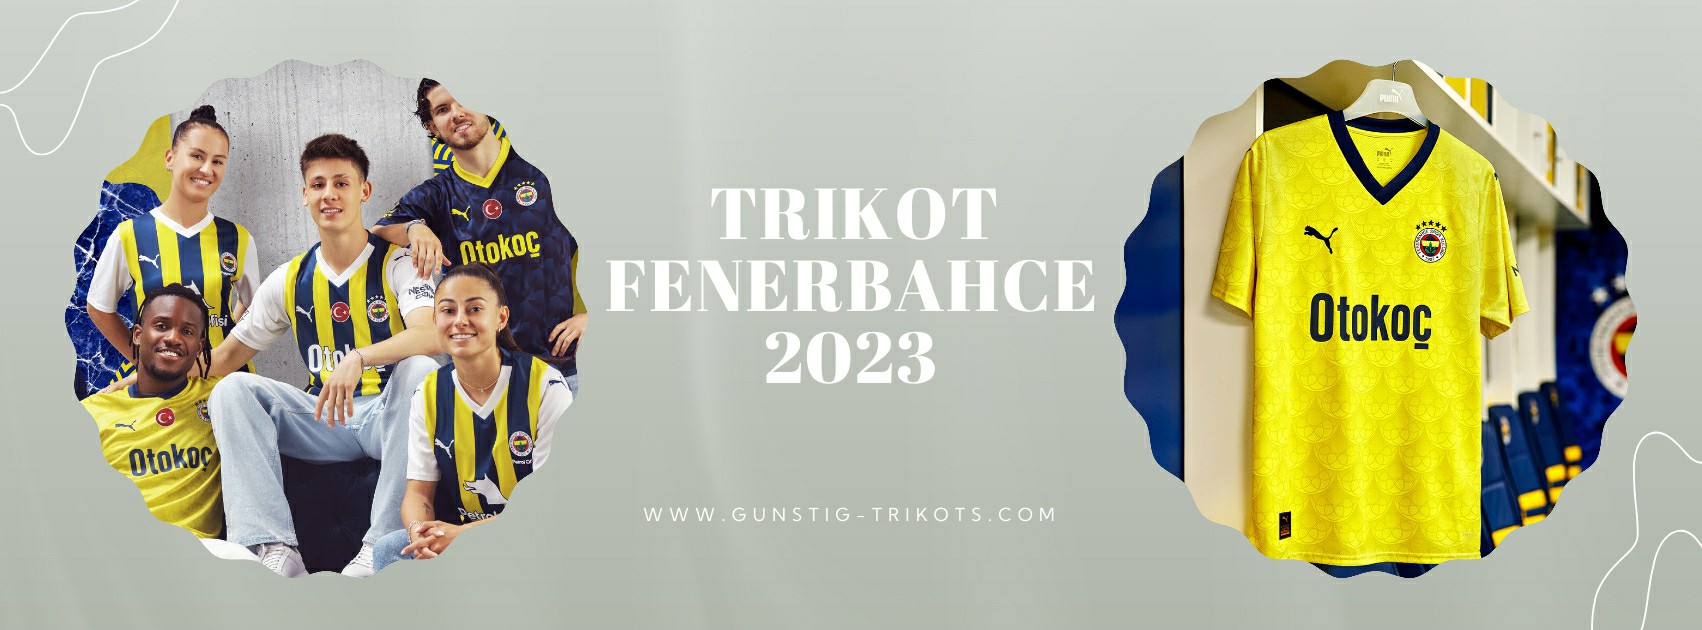 Fenerbahce Trikot 2023-2024